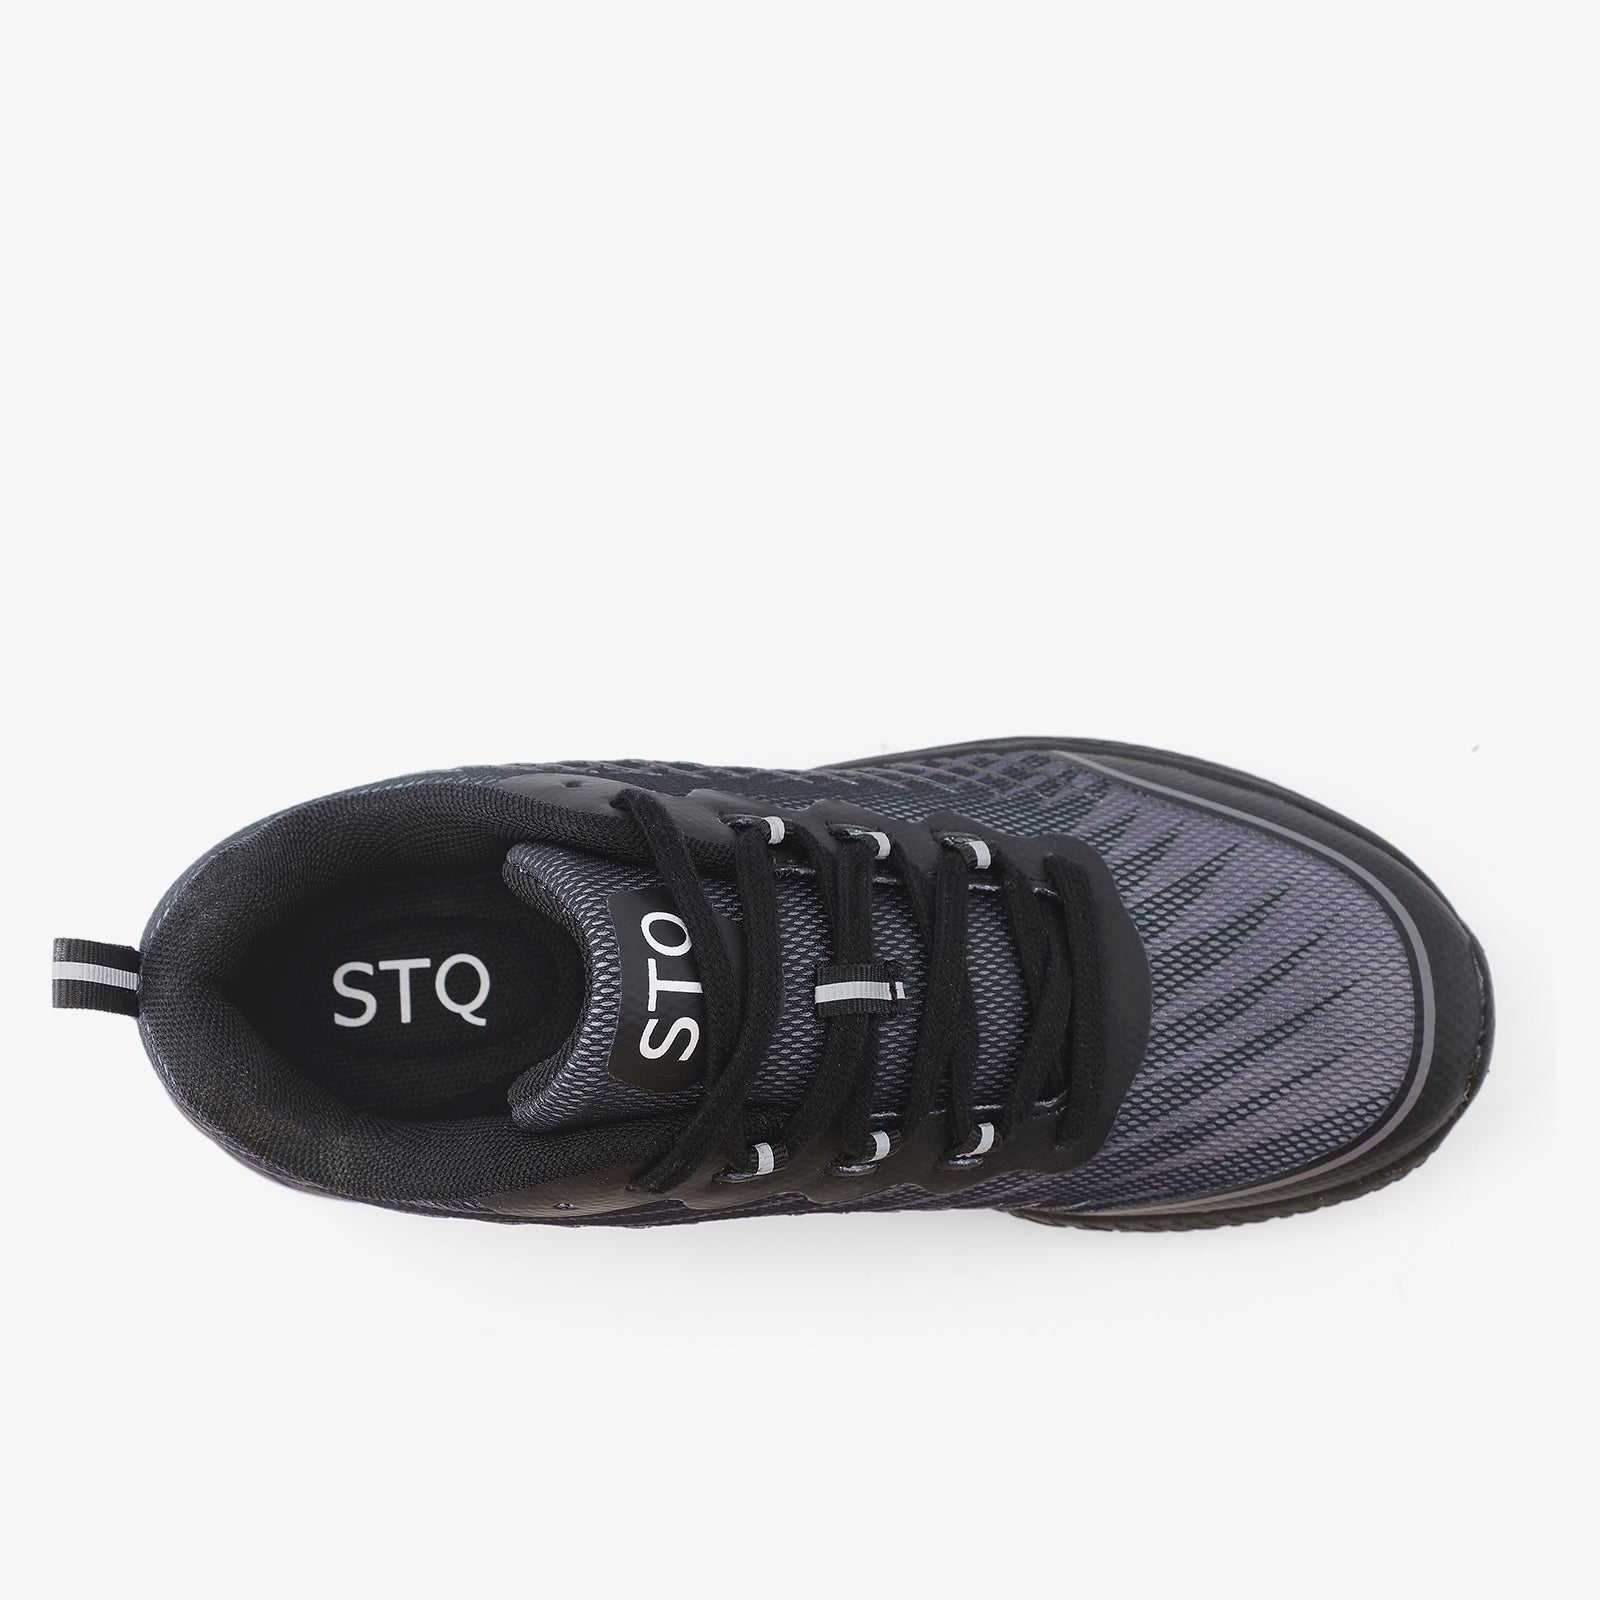 stq-shoes-fashion-sneakers-all-black-view